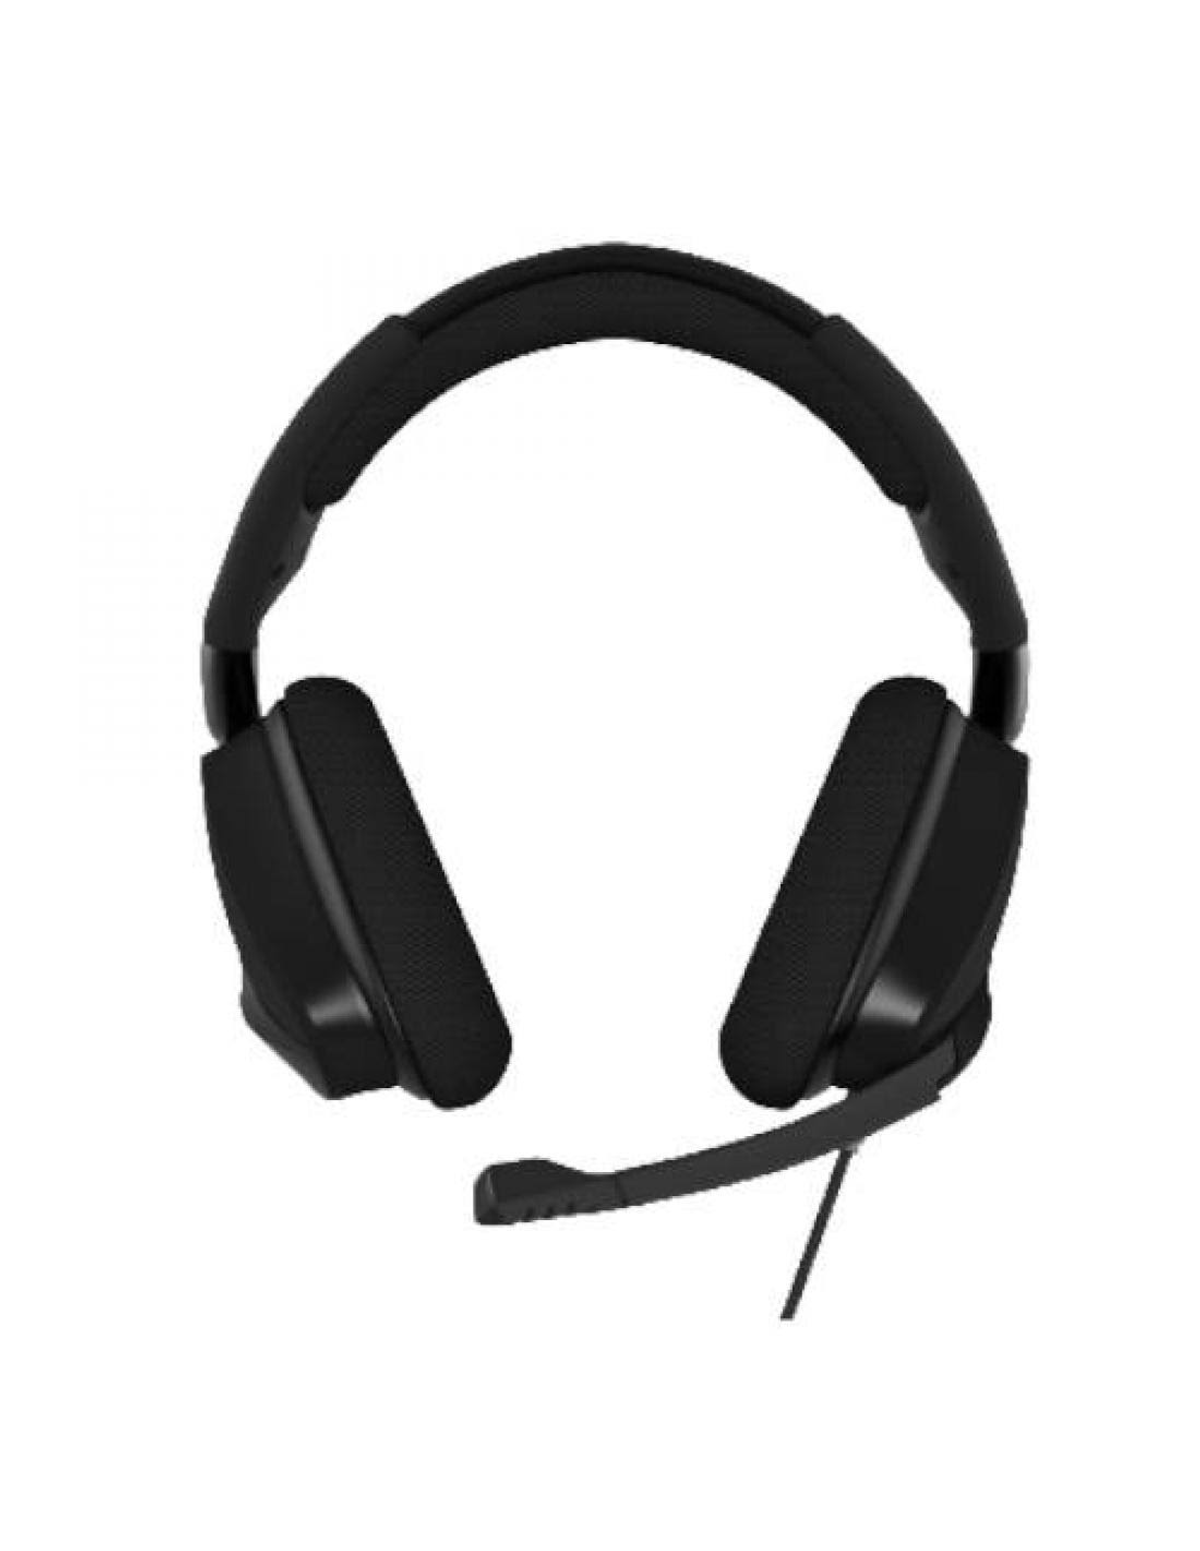 CORSAIR CA-9011205-EU VOID Gaming ELITE Headset SURROUND Carbon CARBON, Over-ear